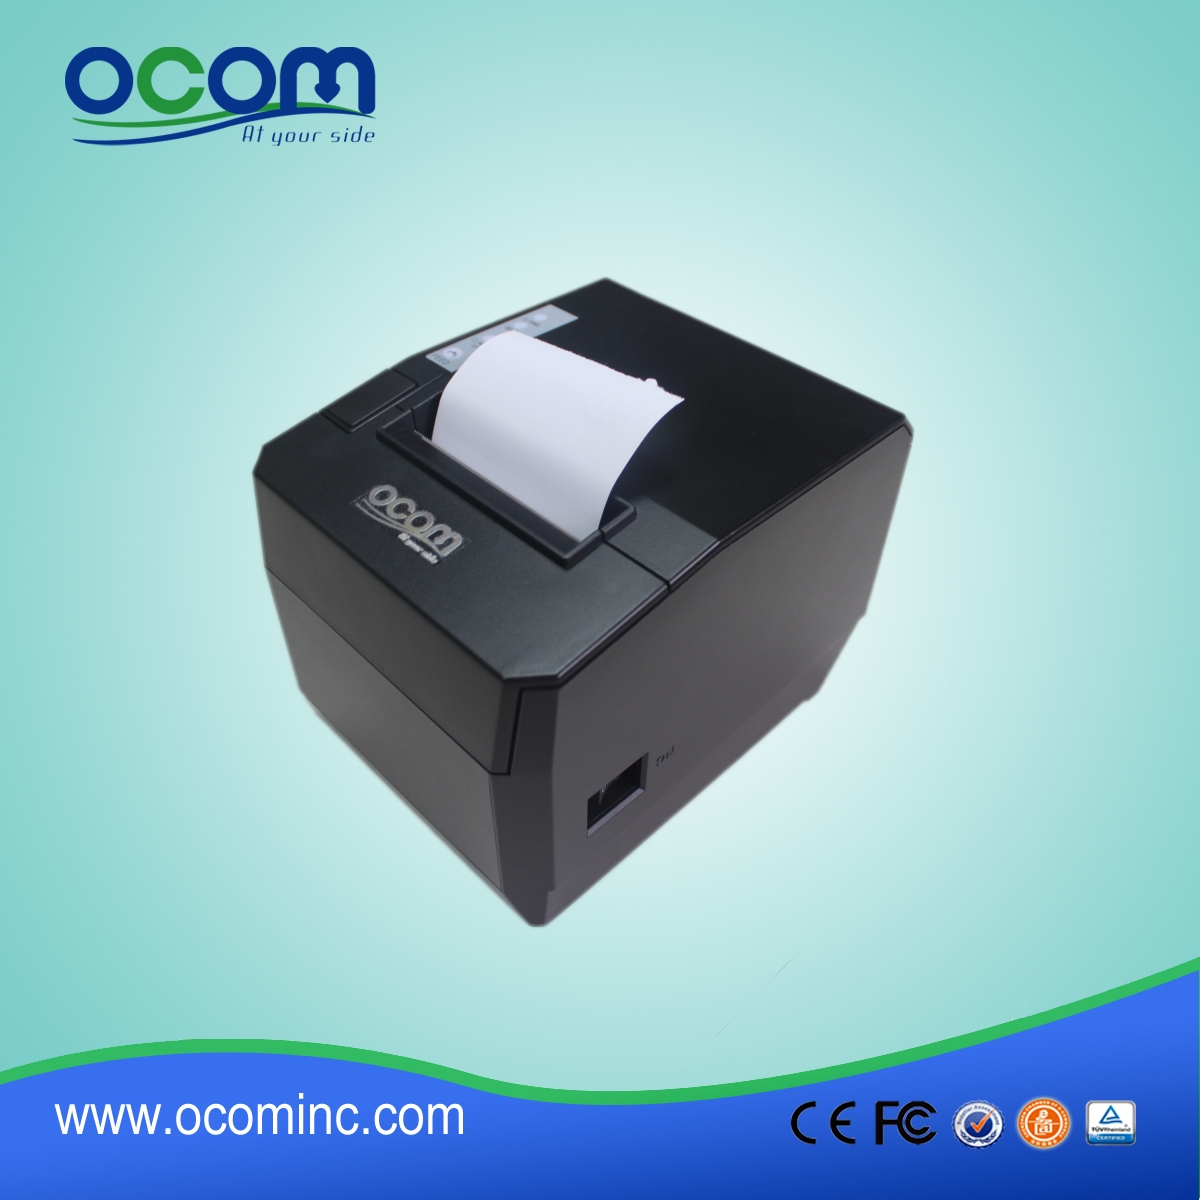 80mm cheap bluetooth thermal printer auto cutter receipt printing machine